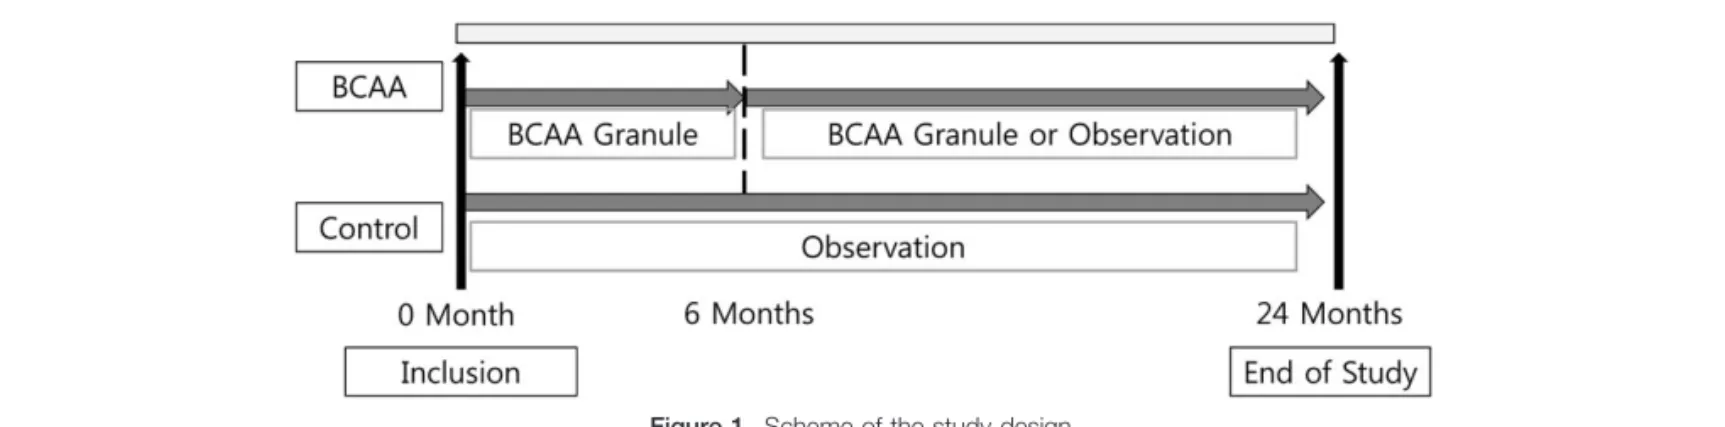 Figure 1. Scheme of the study design.